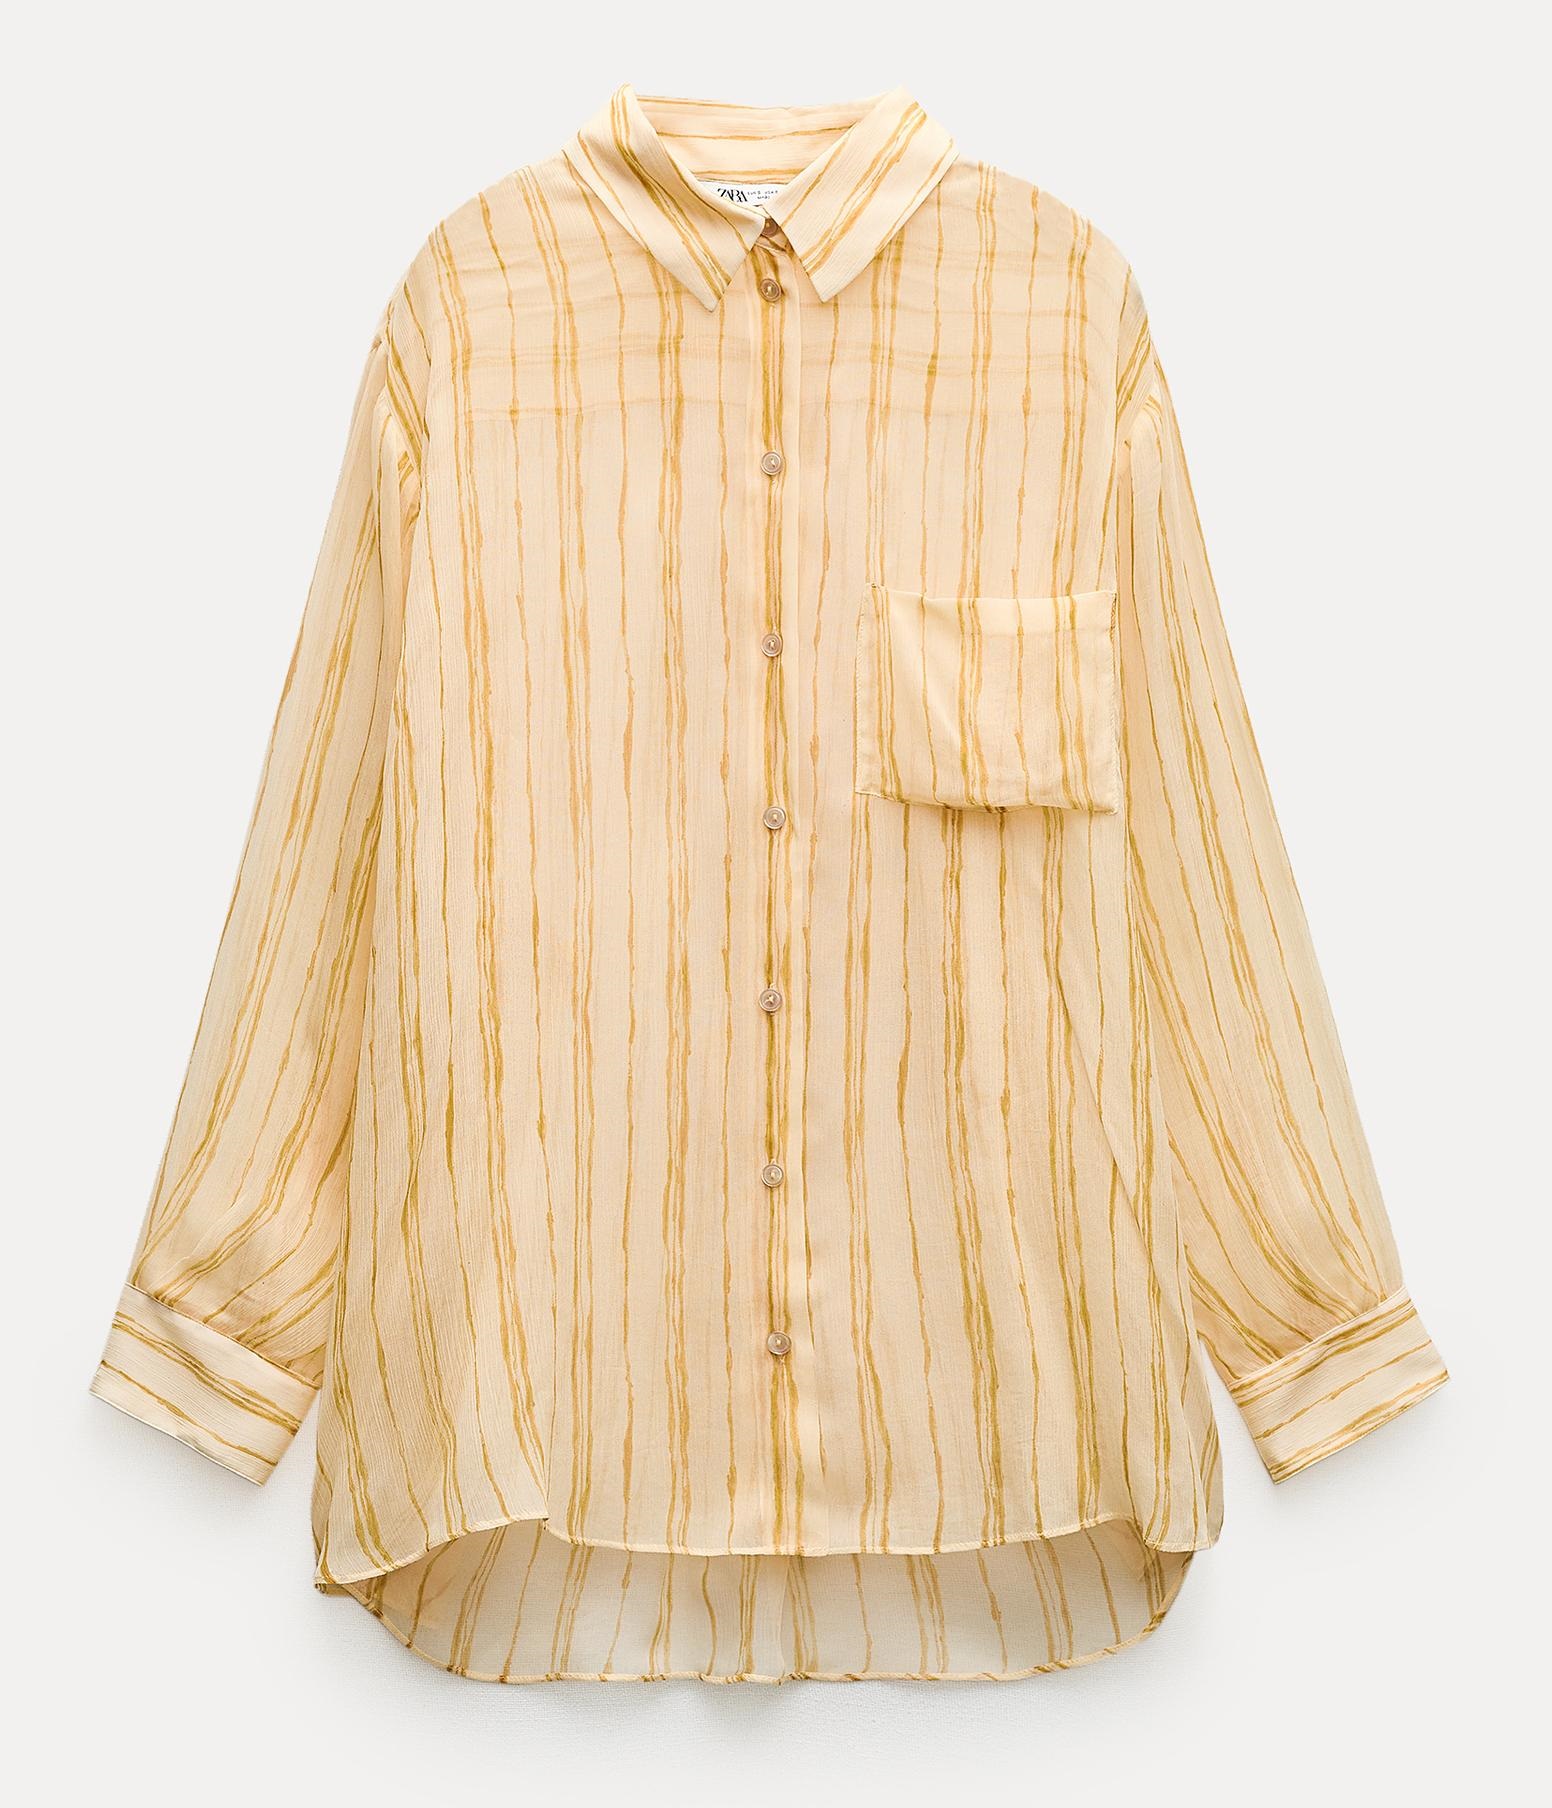 Рубашка Zara Zw Collection Striped With Pocket, мультиколор рубашка zara striped with pocket мультиколор